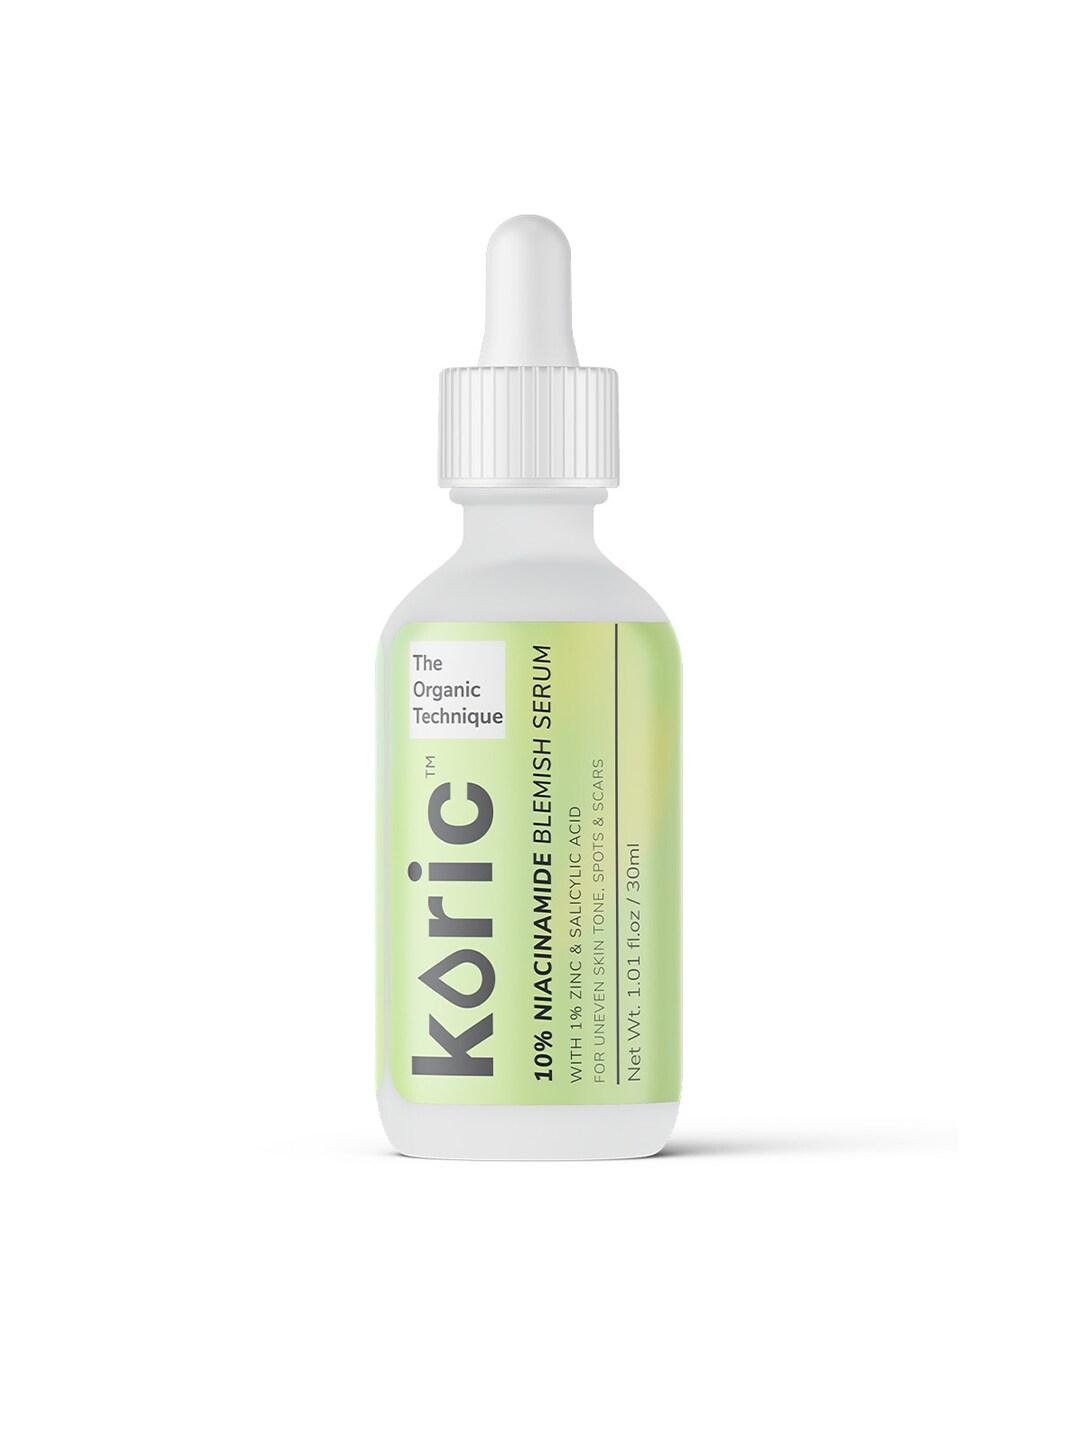 Koric The Organic Technique 10% Niacinamide Blemish Serum with Salicylic Acid - 30 ml